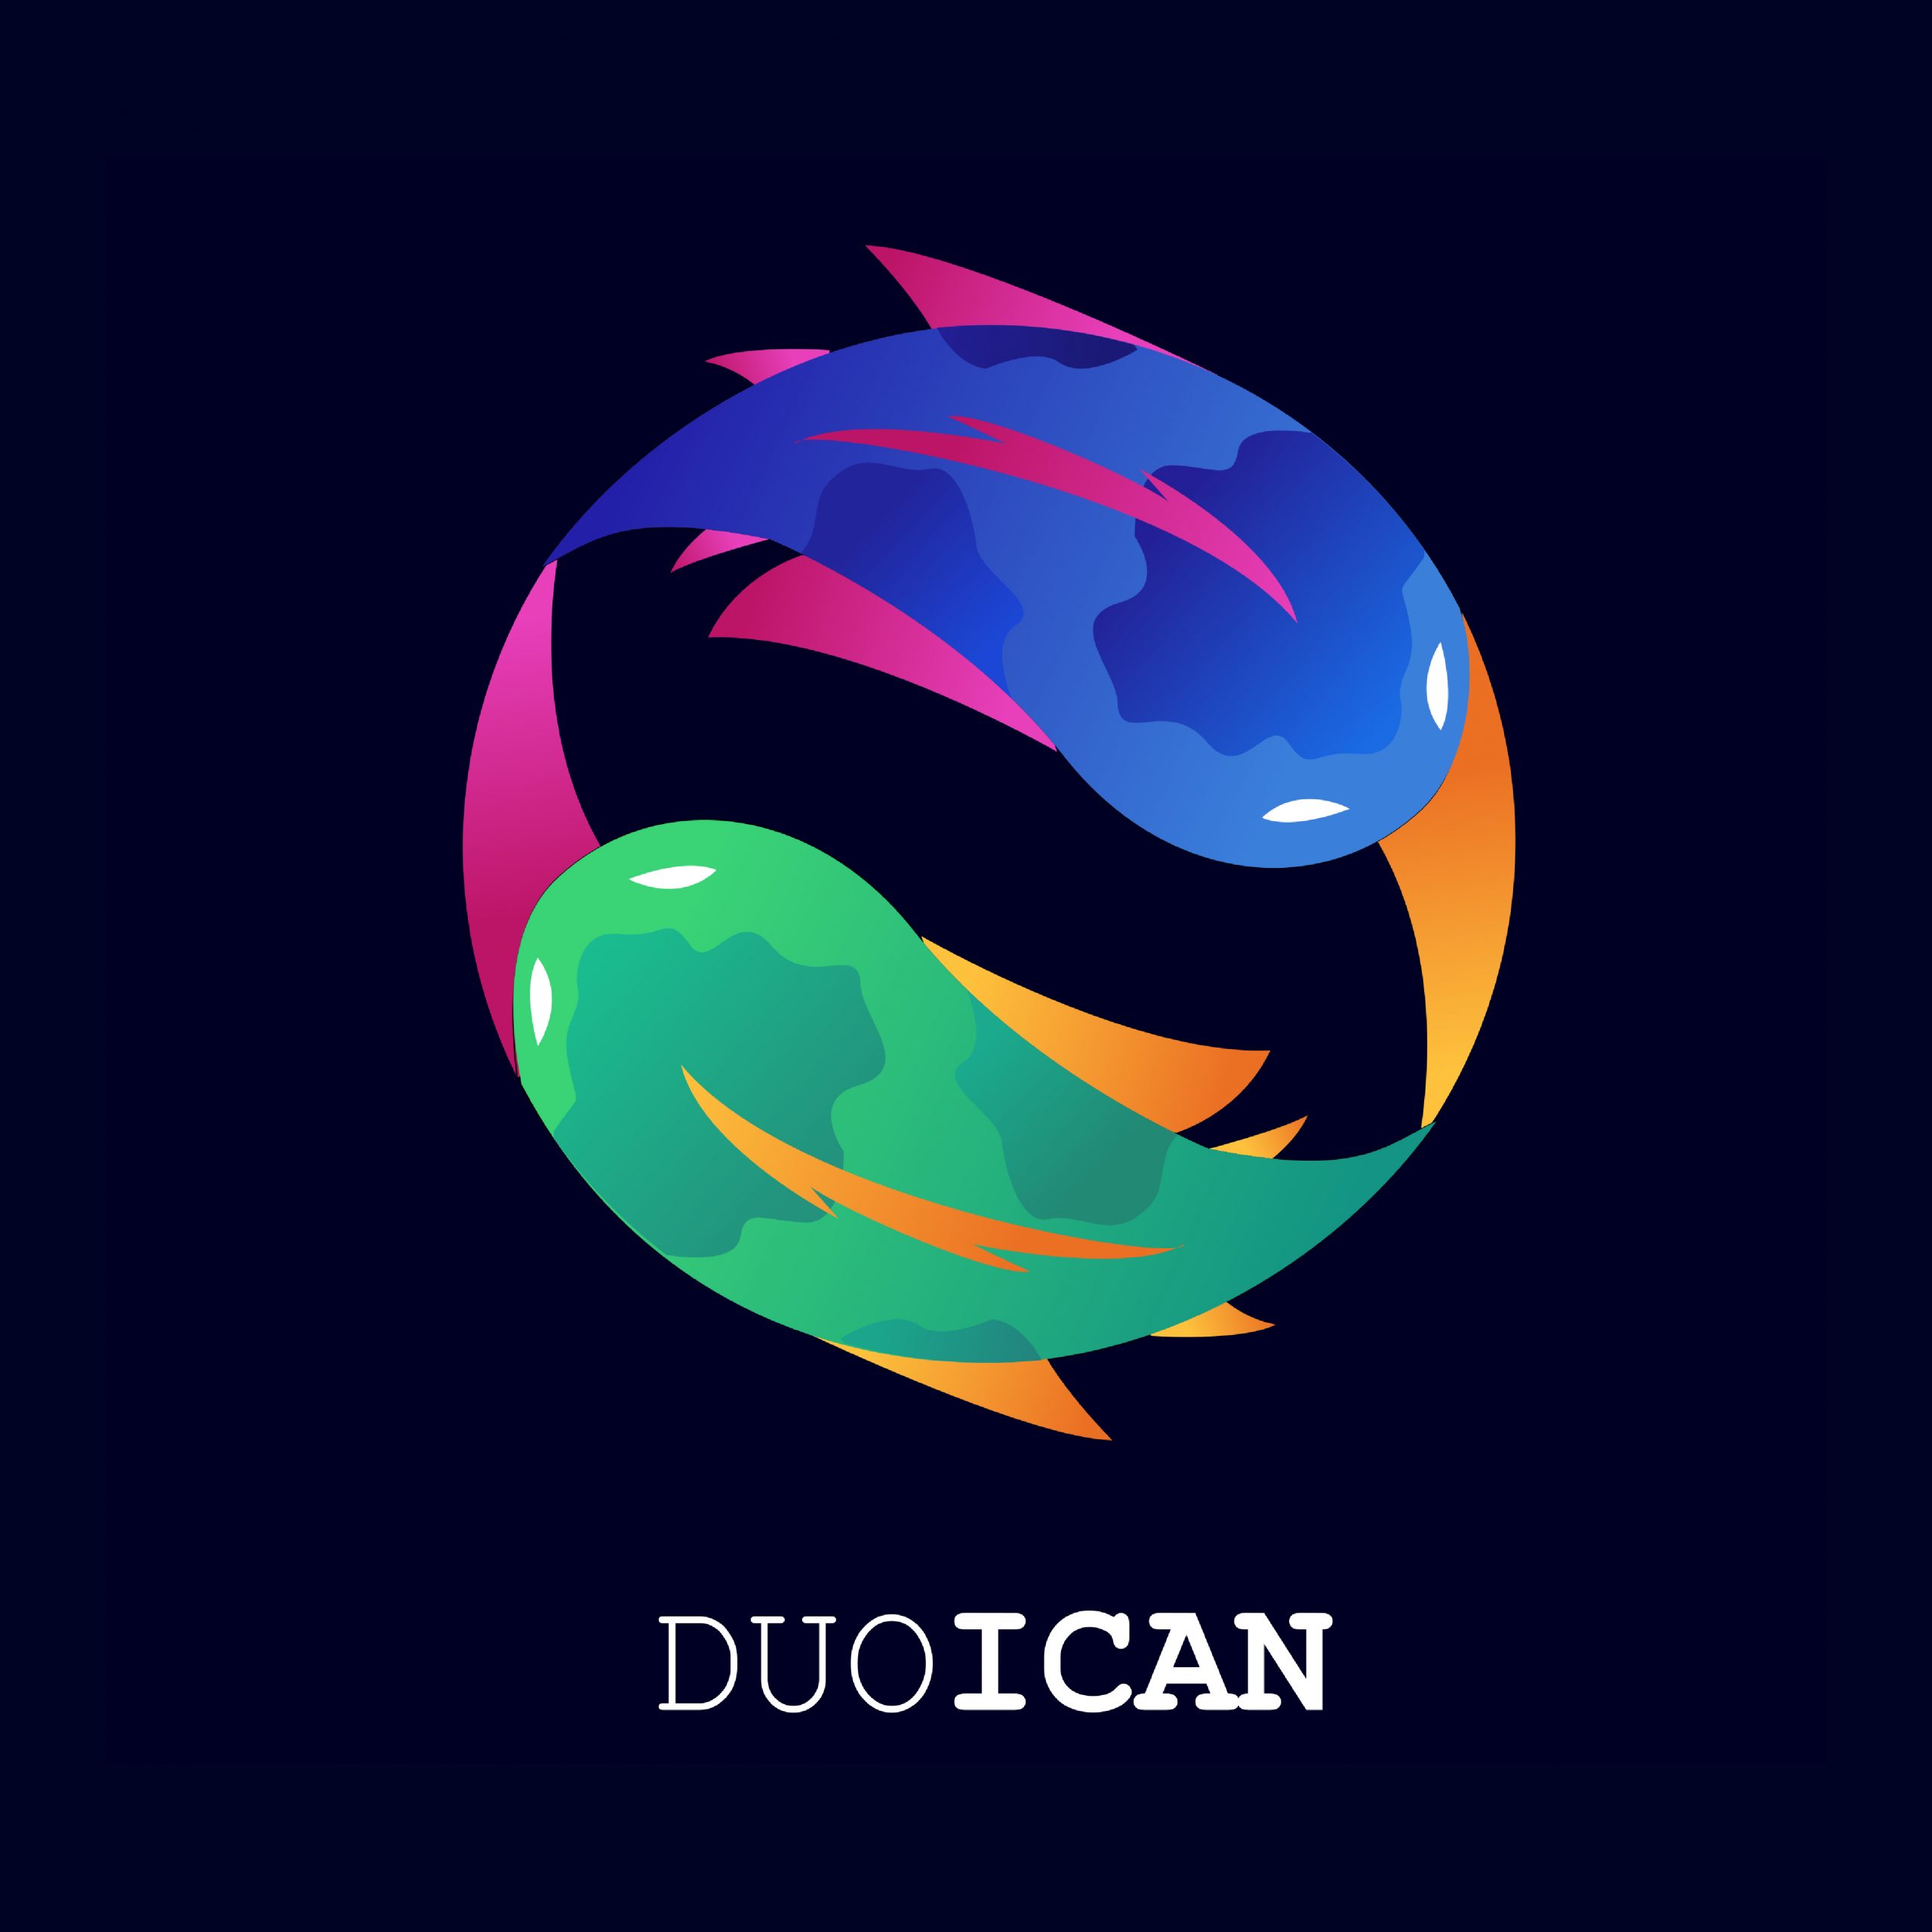 You are currently viewing Desain Logo Duo Ican karya Mafaza Aura Qonita